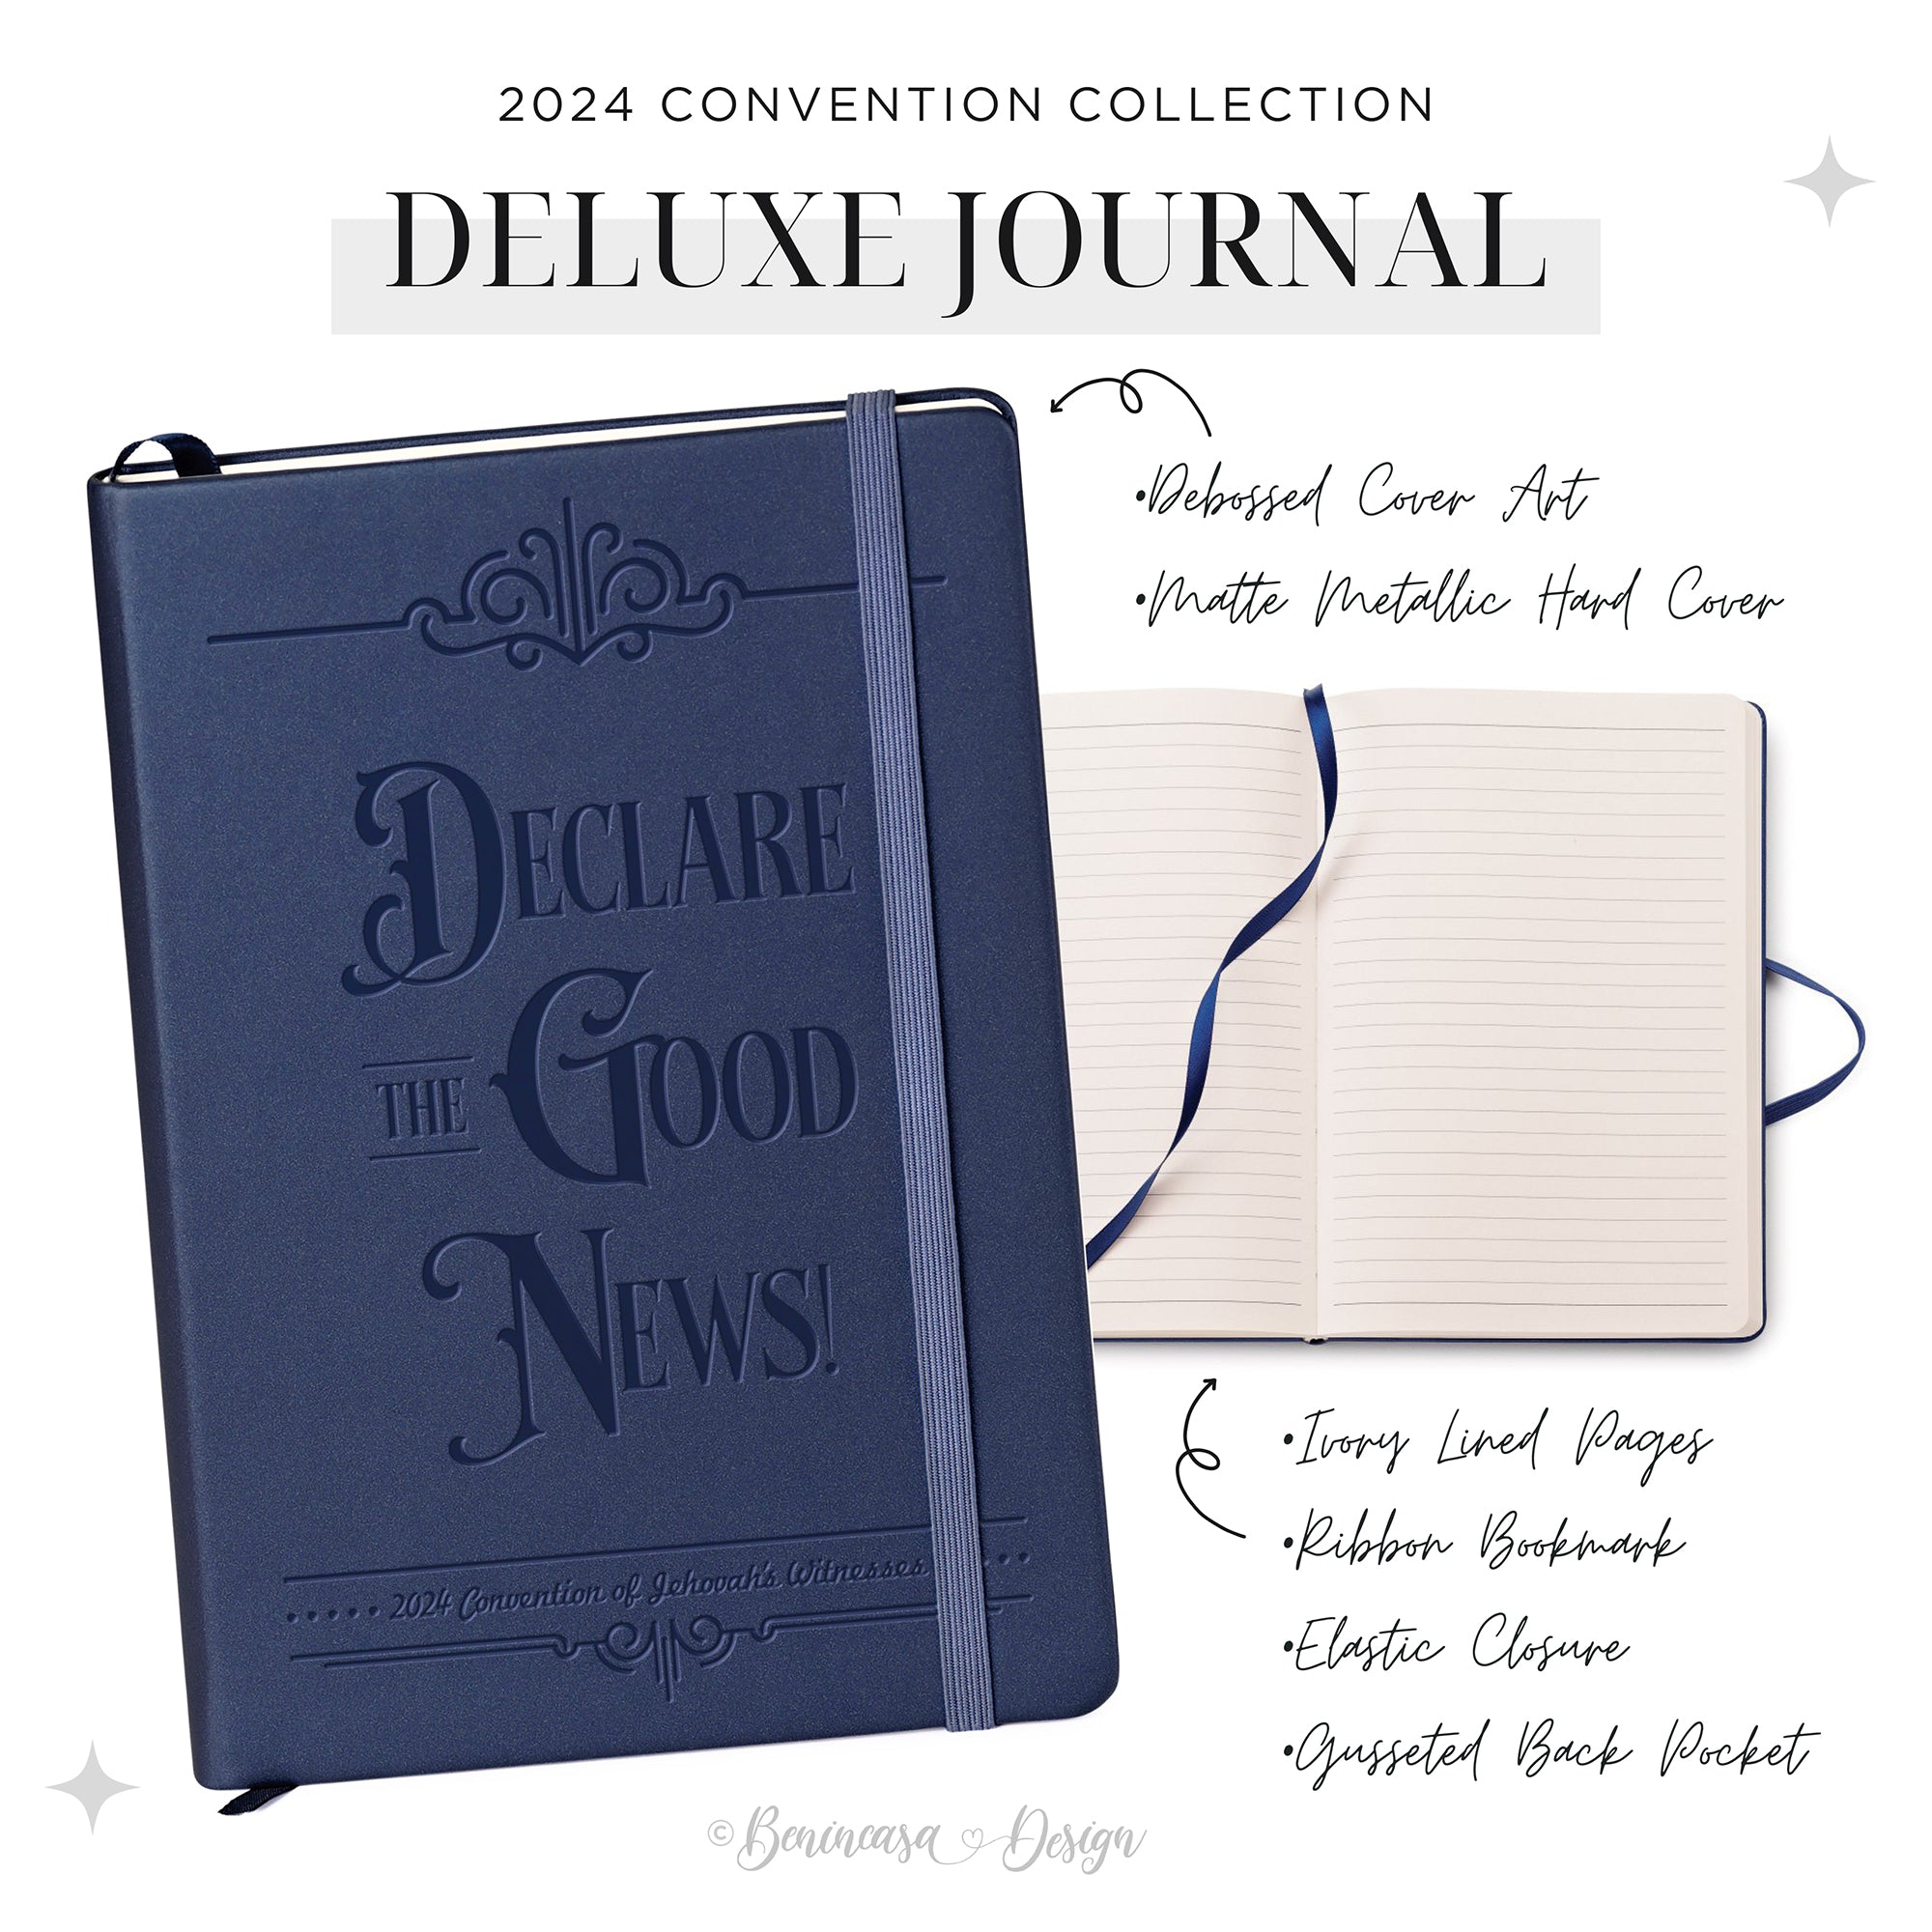 Deluxe Hardcover Journal: 2024 “Declare the Good News”!